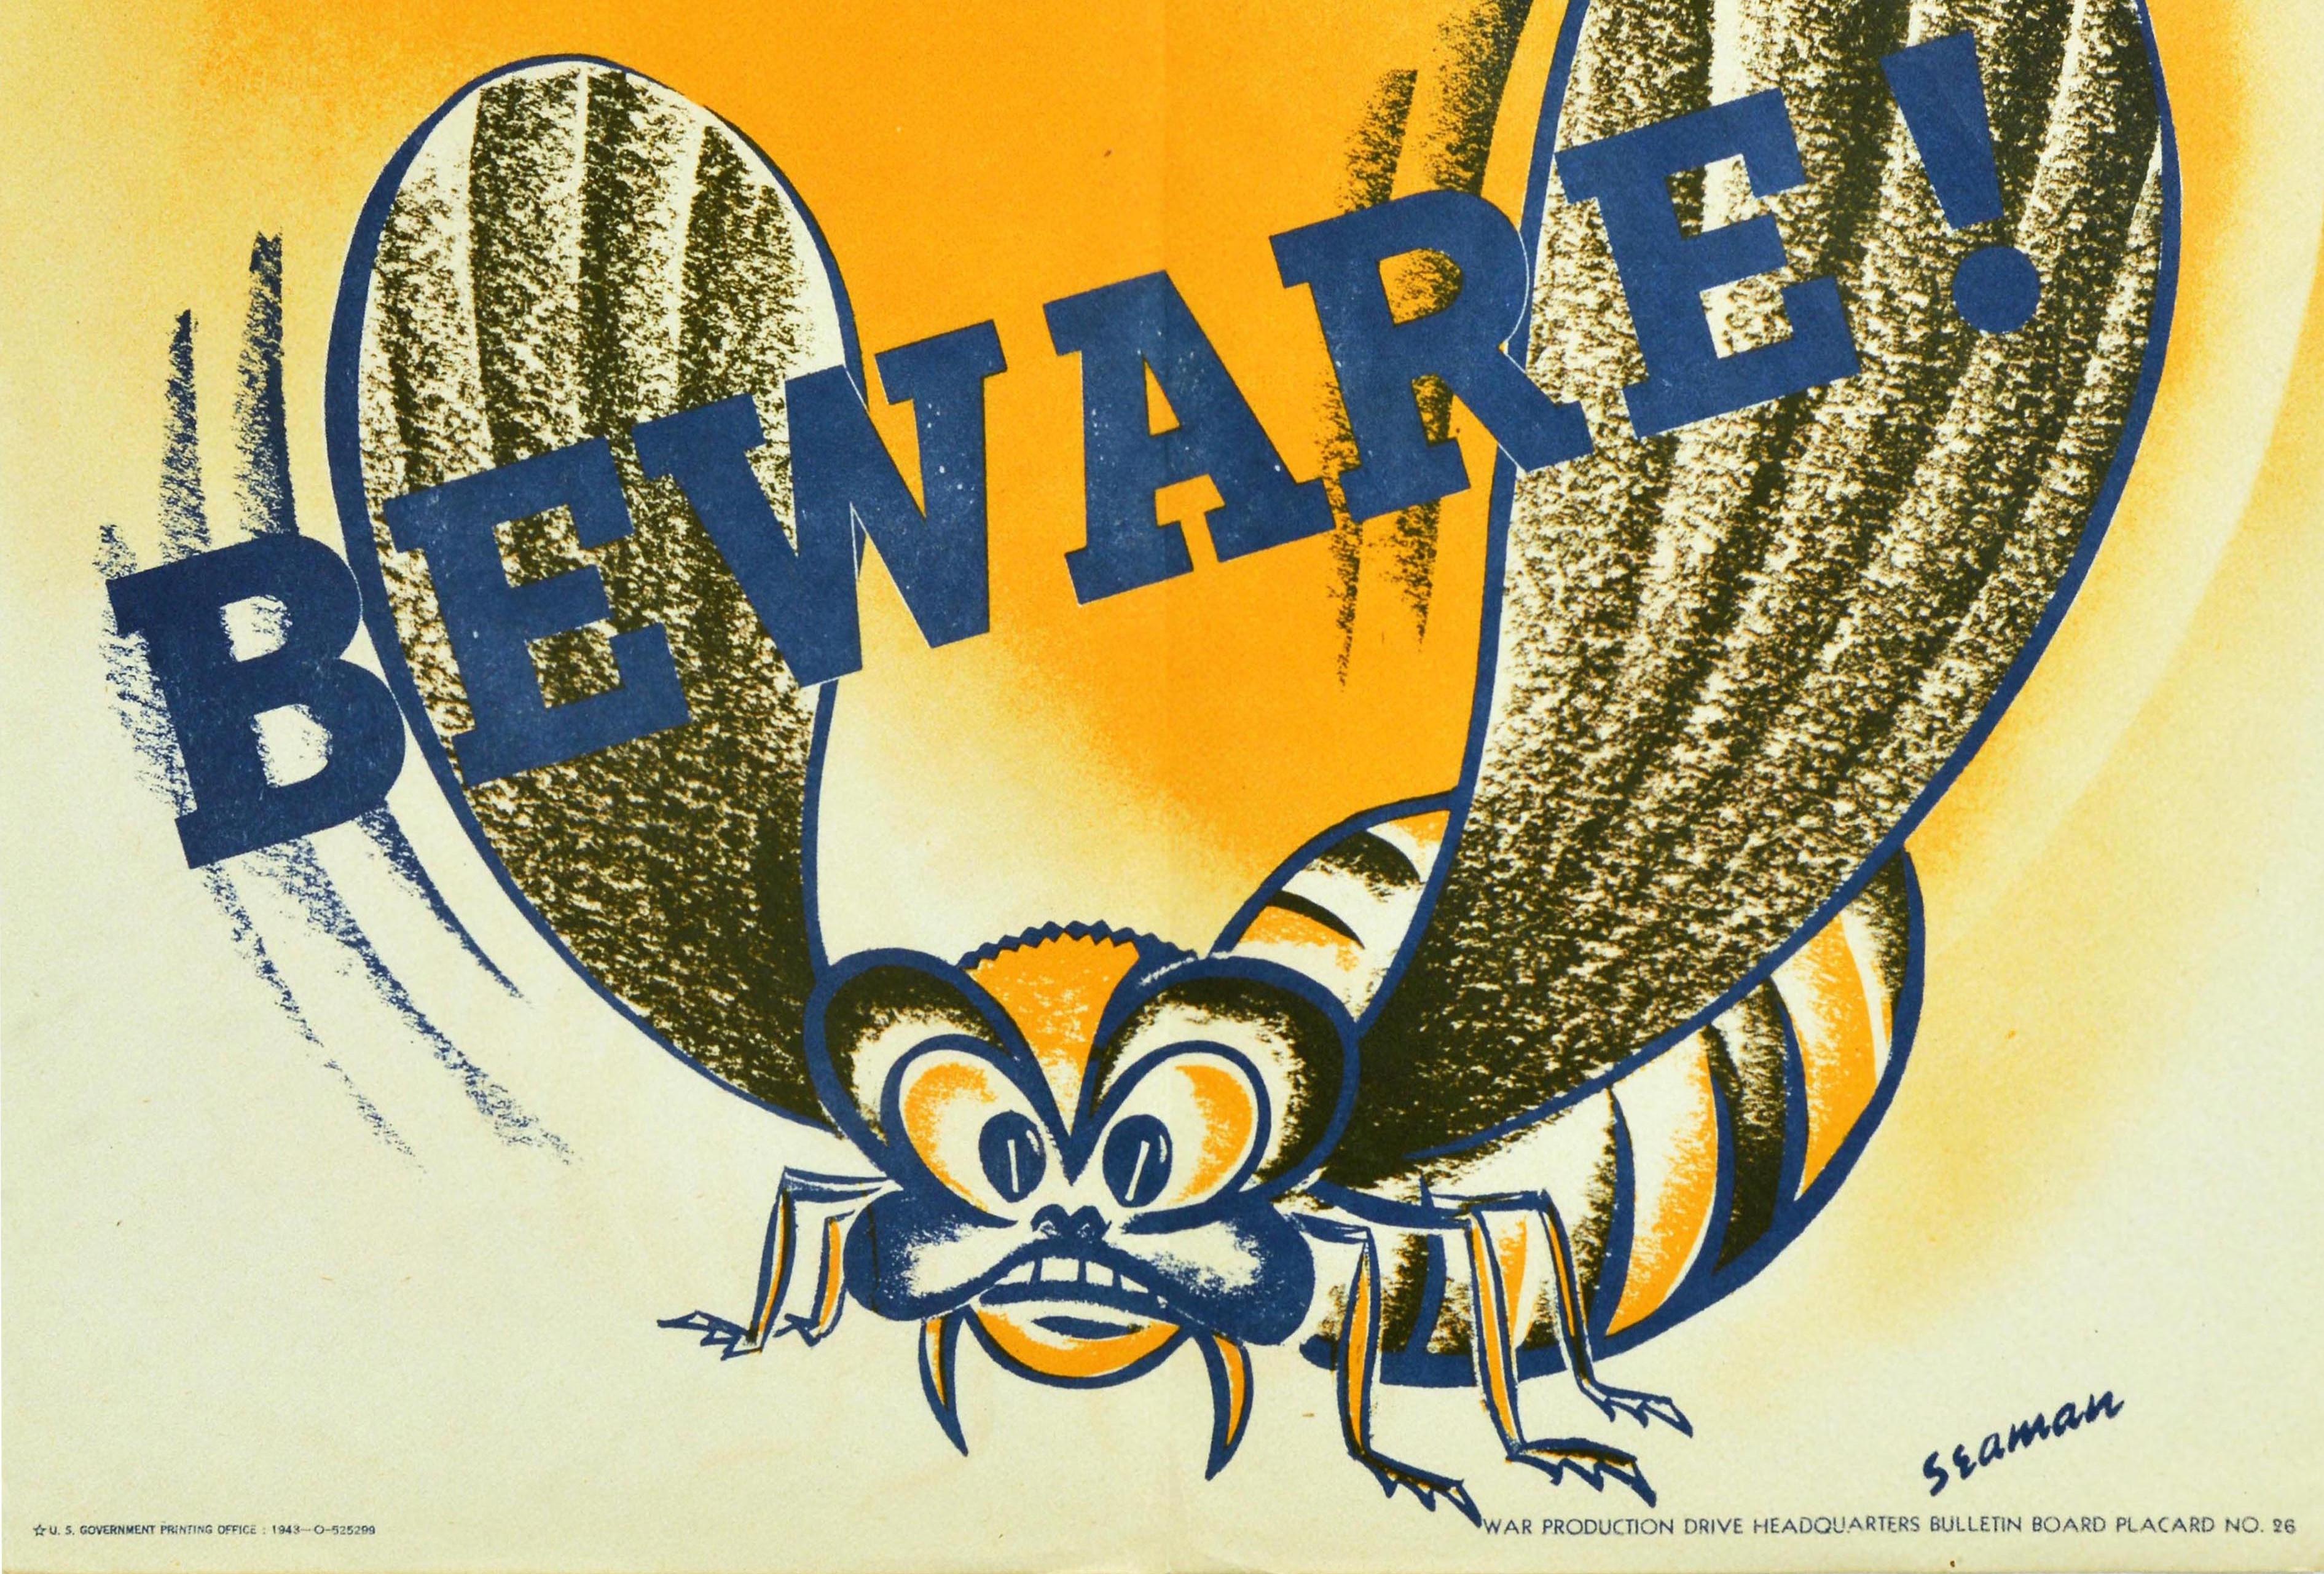 Original Vintage WWII Propaganda Poster Beware Wasp Design War Production Drive - Print by Seaman